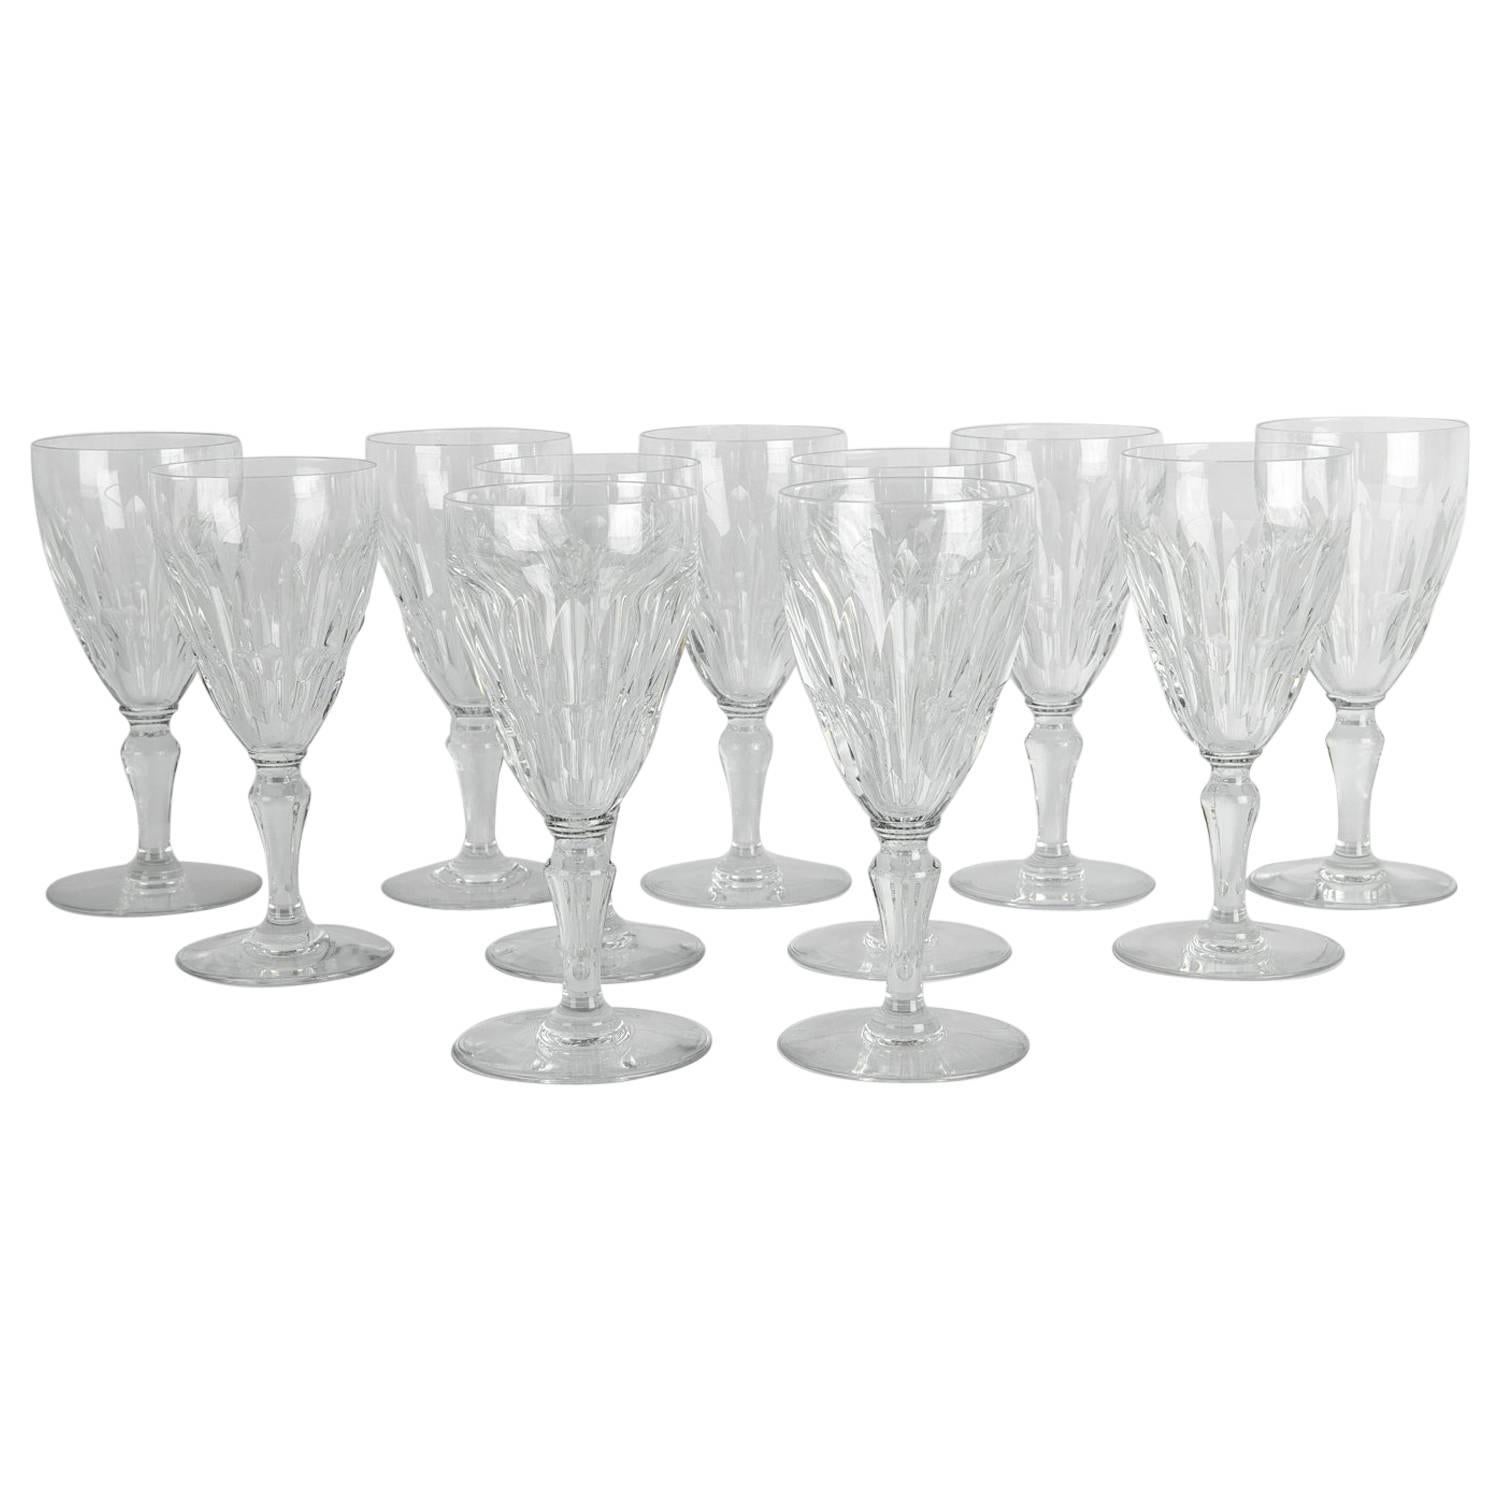 Mid-20th Century Baccarat Crystal Glassware Set